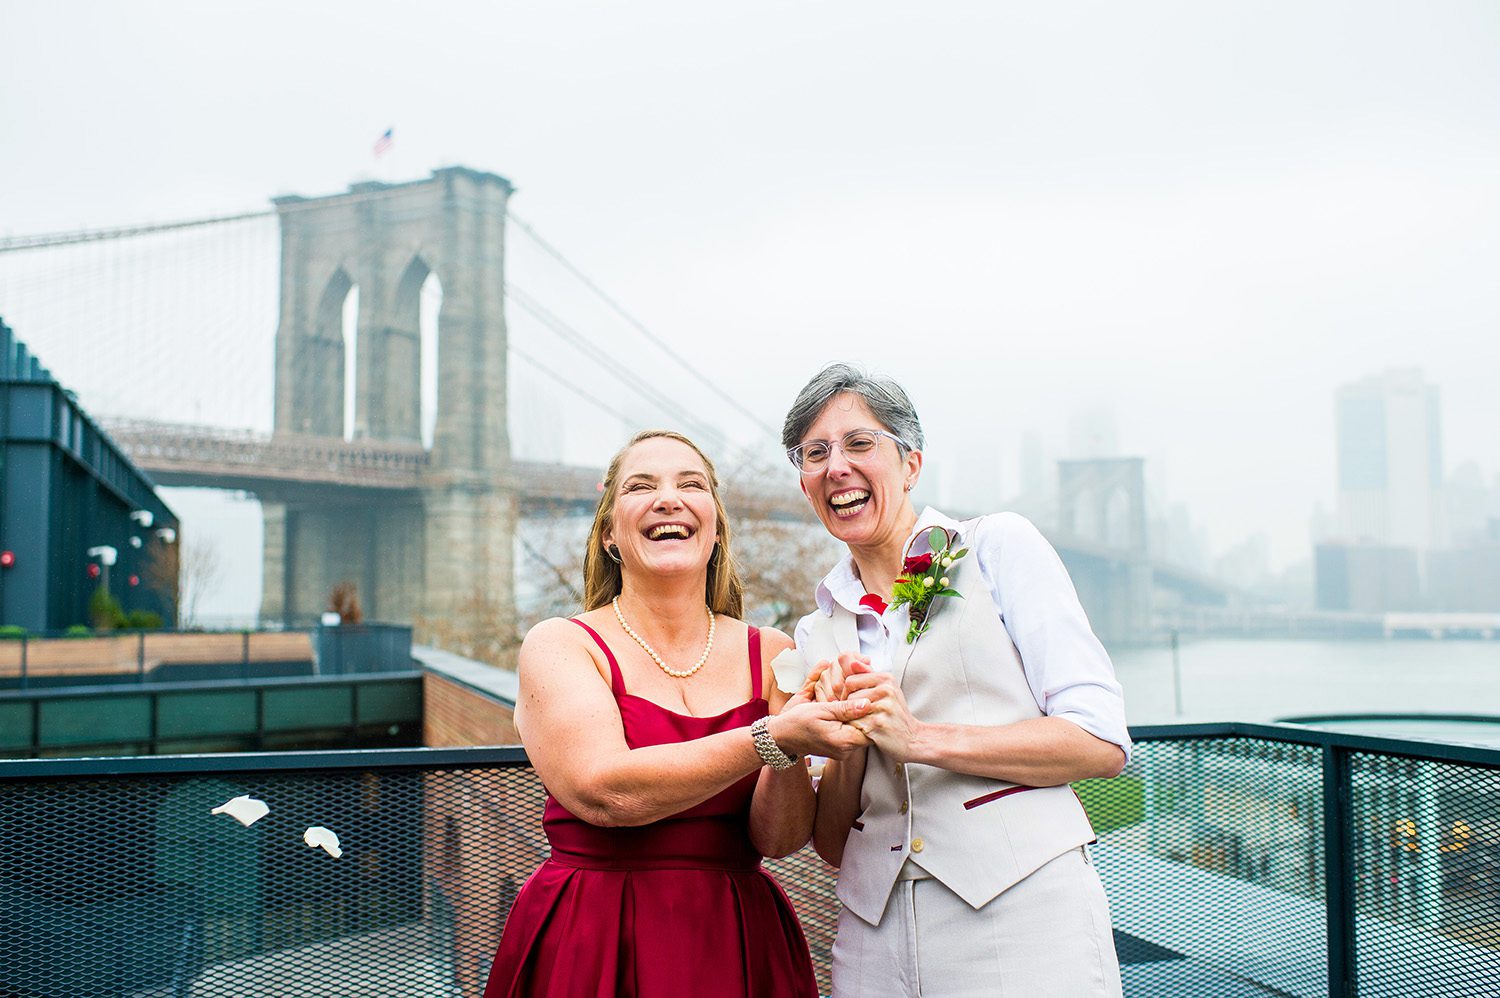 Two Bridge Getting Married in Brooklyn 